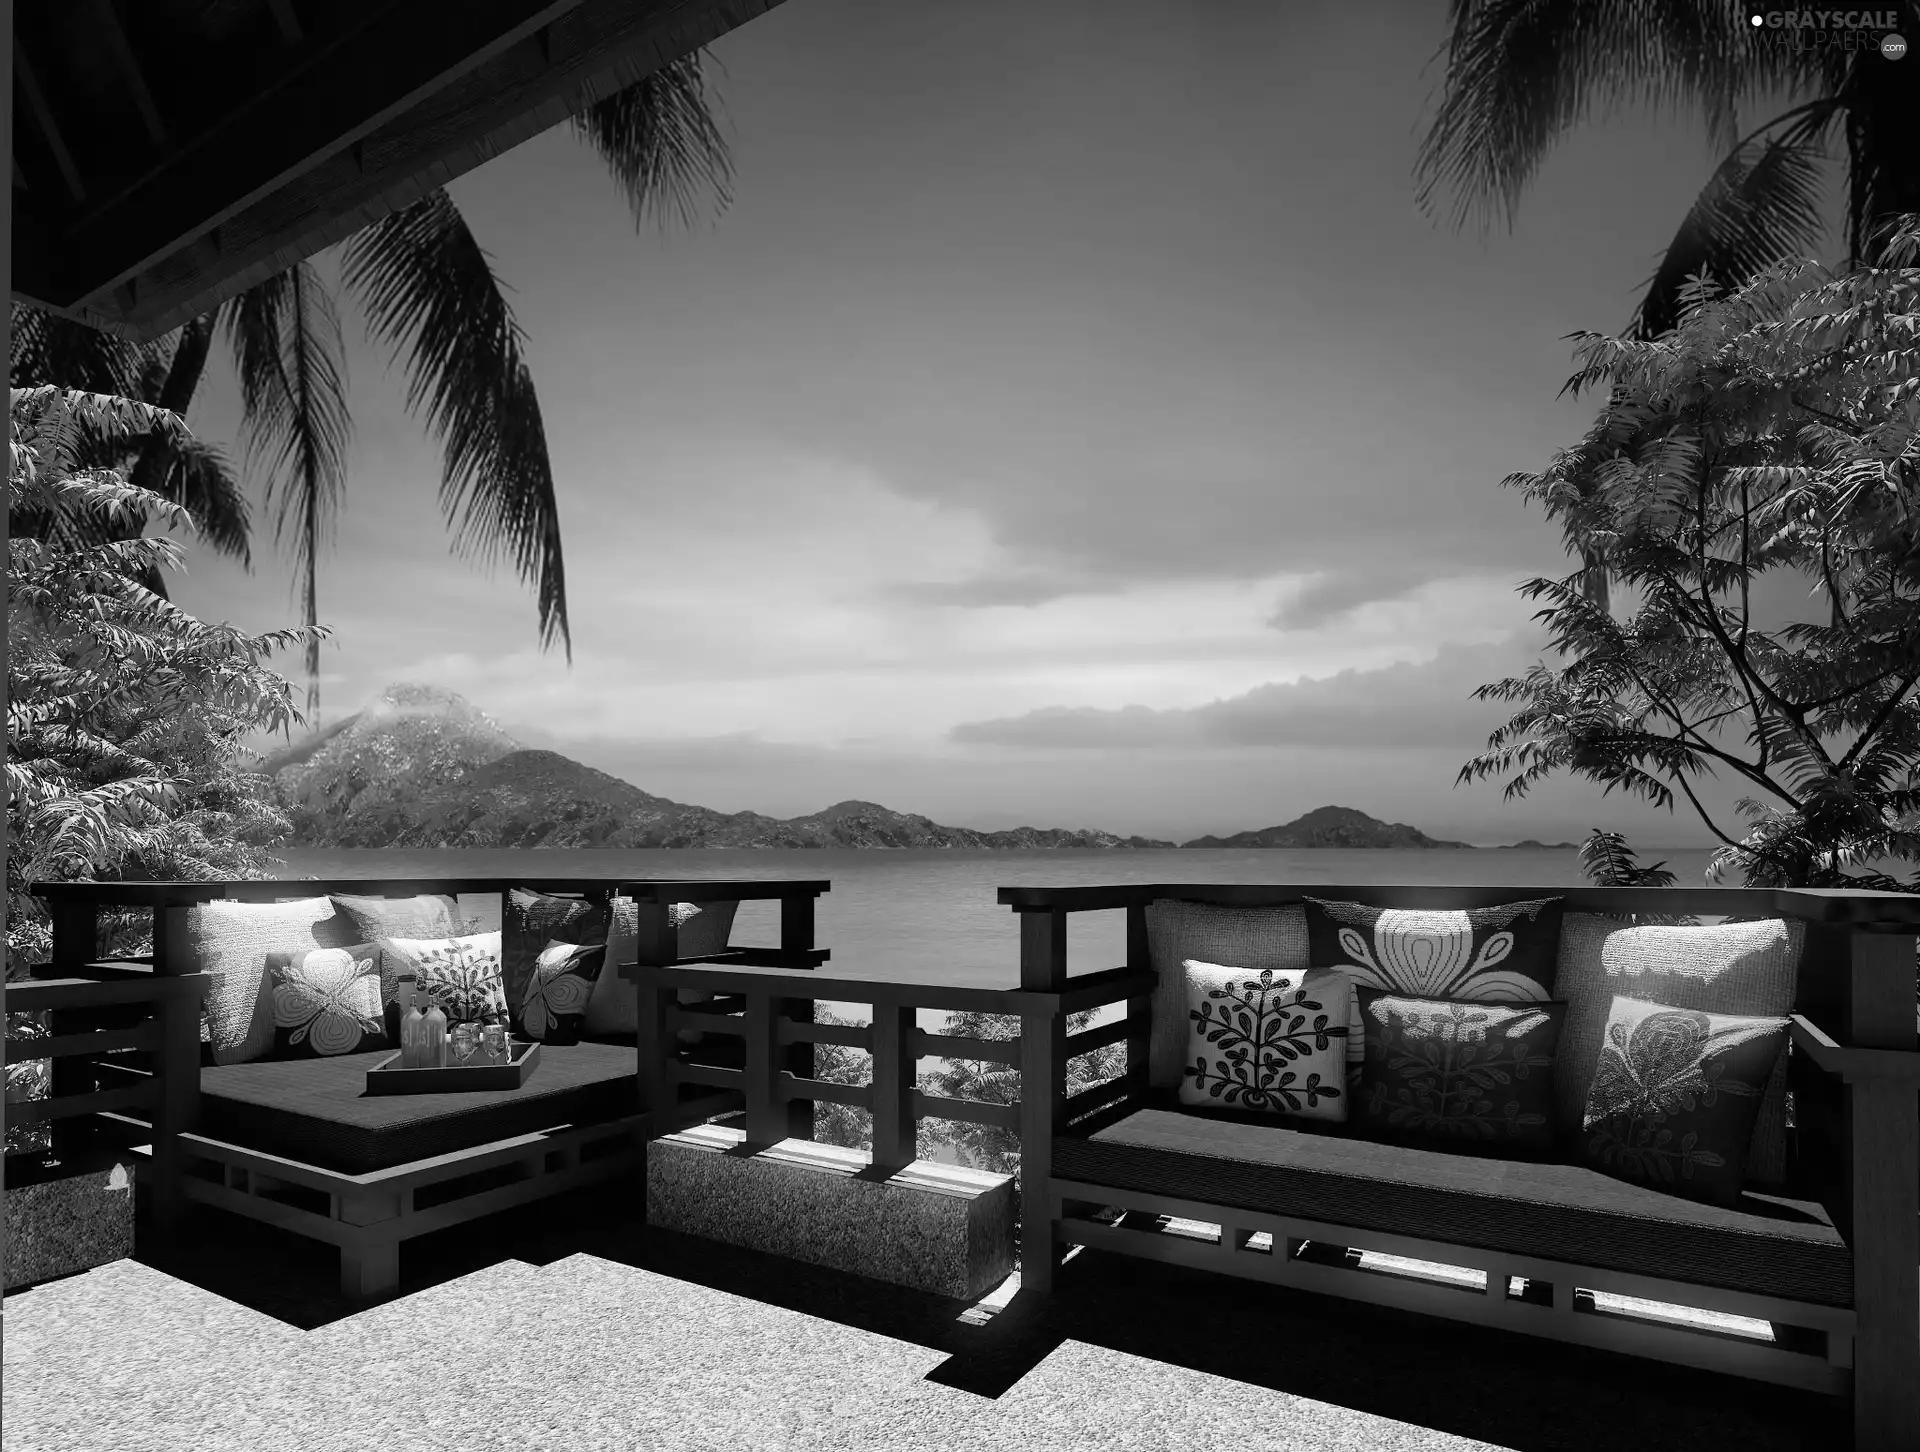 The hotel, Islands, Thailand, terrace